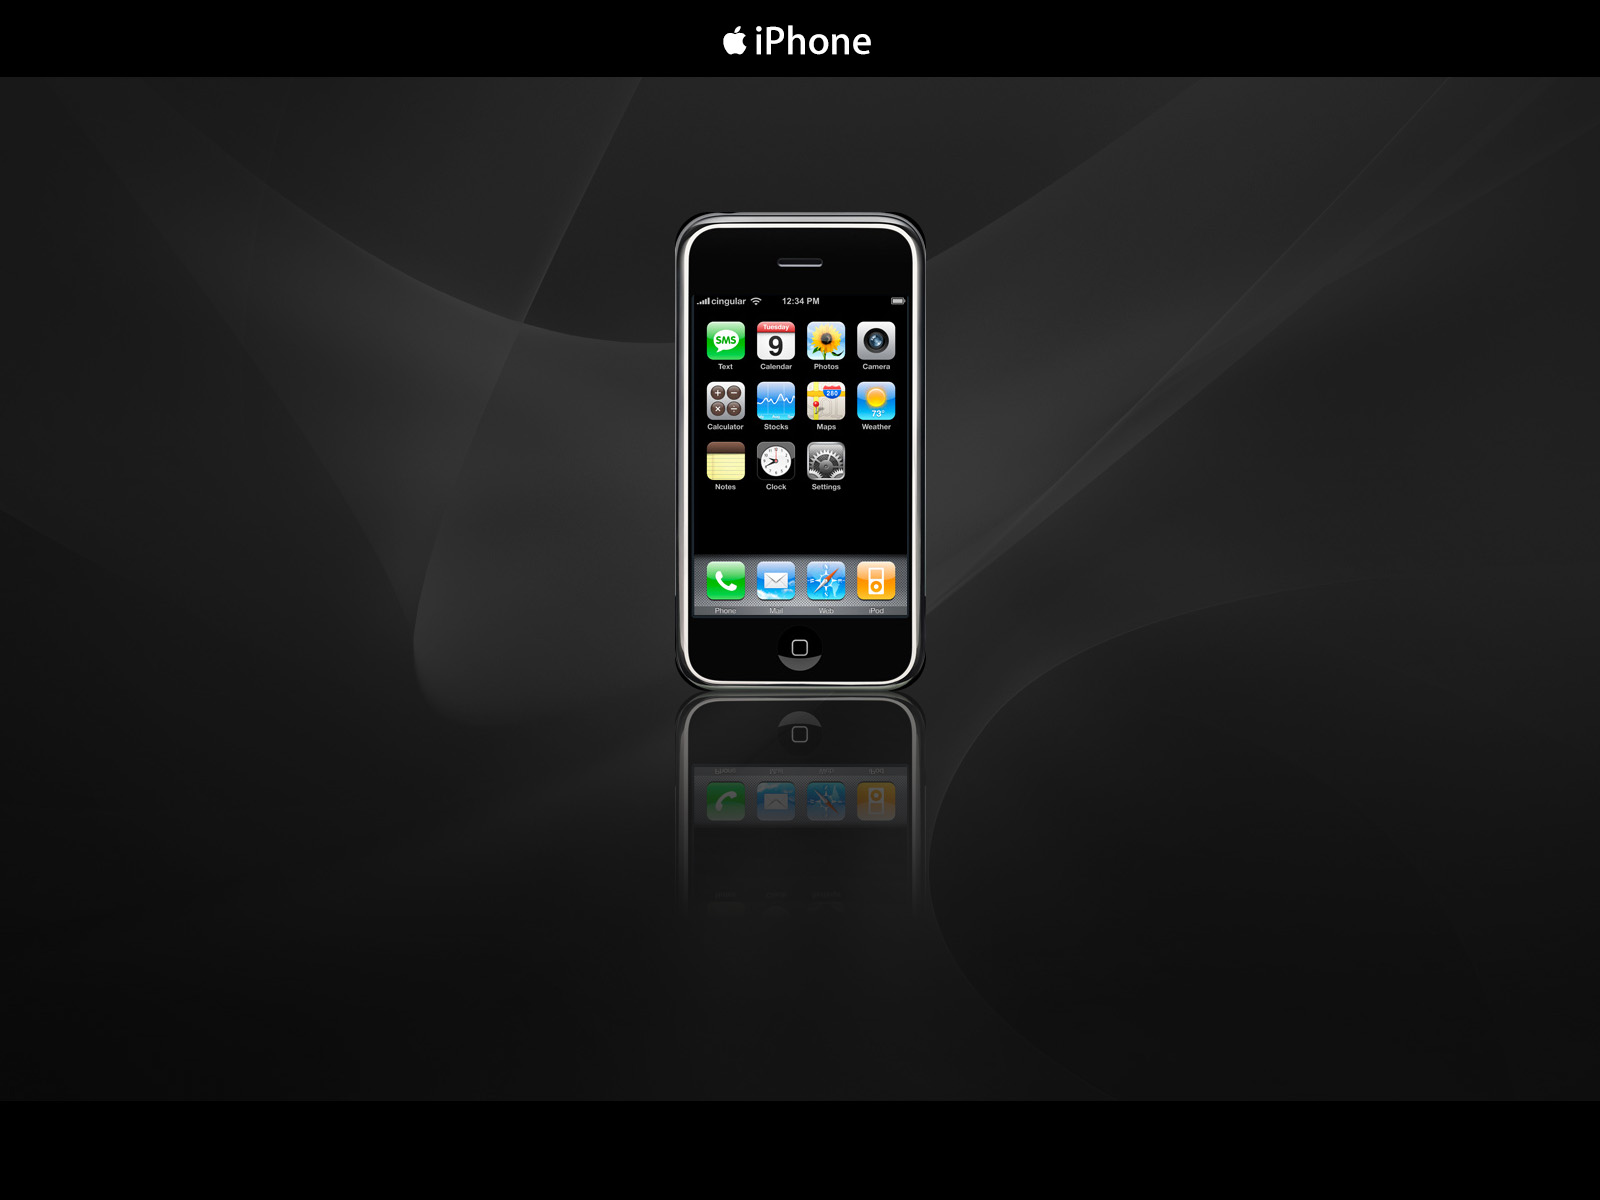 iPhone In Dark X Kb Jpeg Elemental Apple Wallpaper